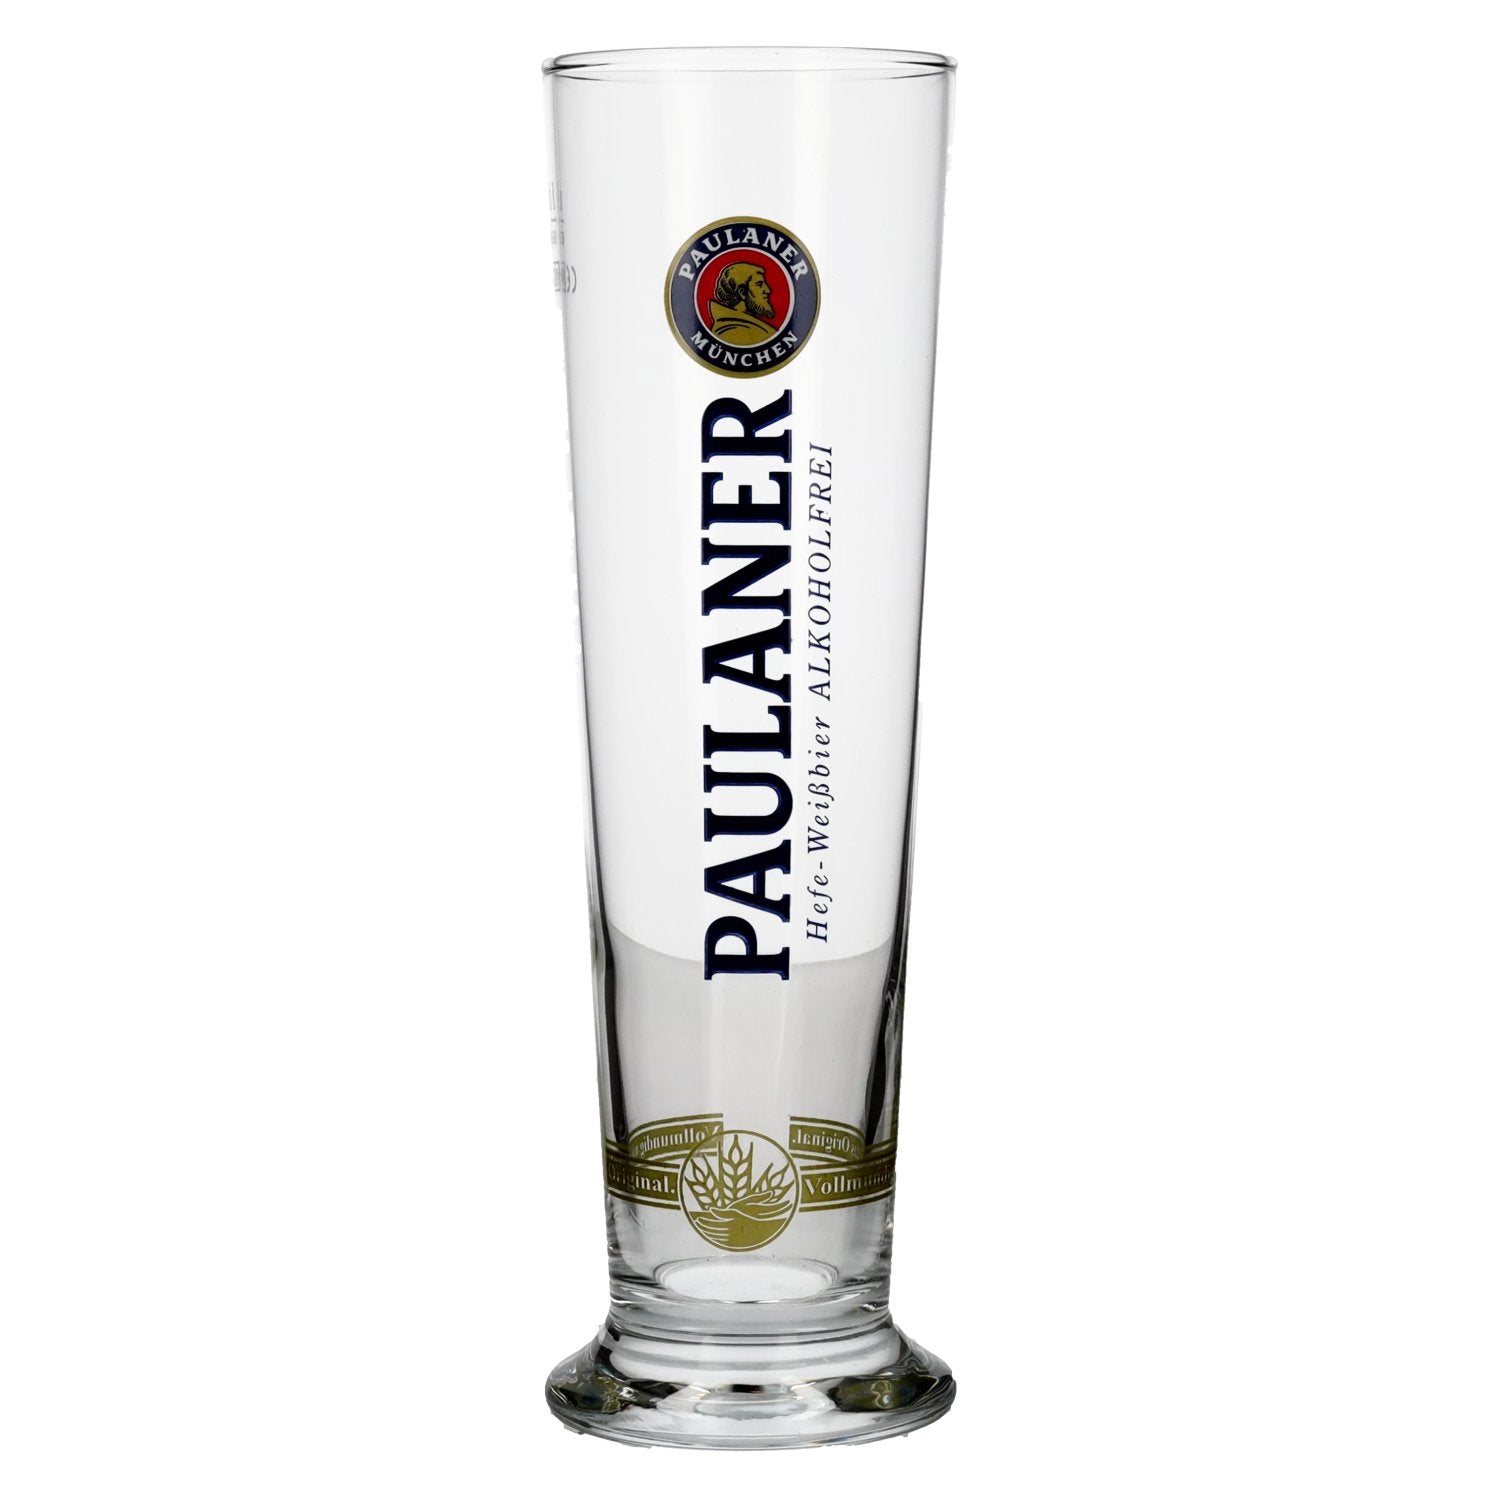 Paulaner Hefe-Weissbier alkoholfrei glass 0,5l